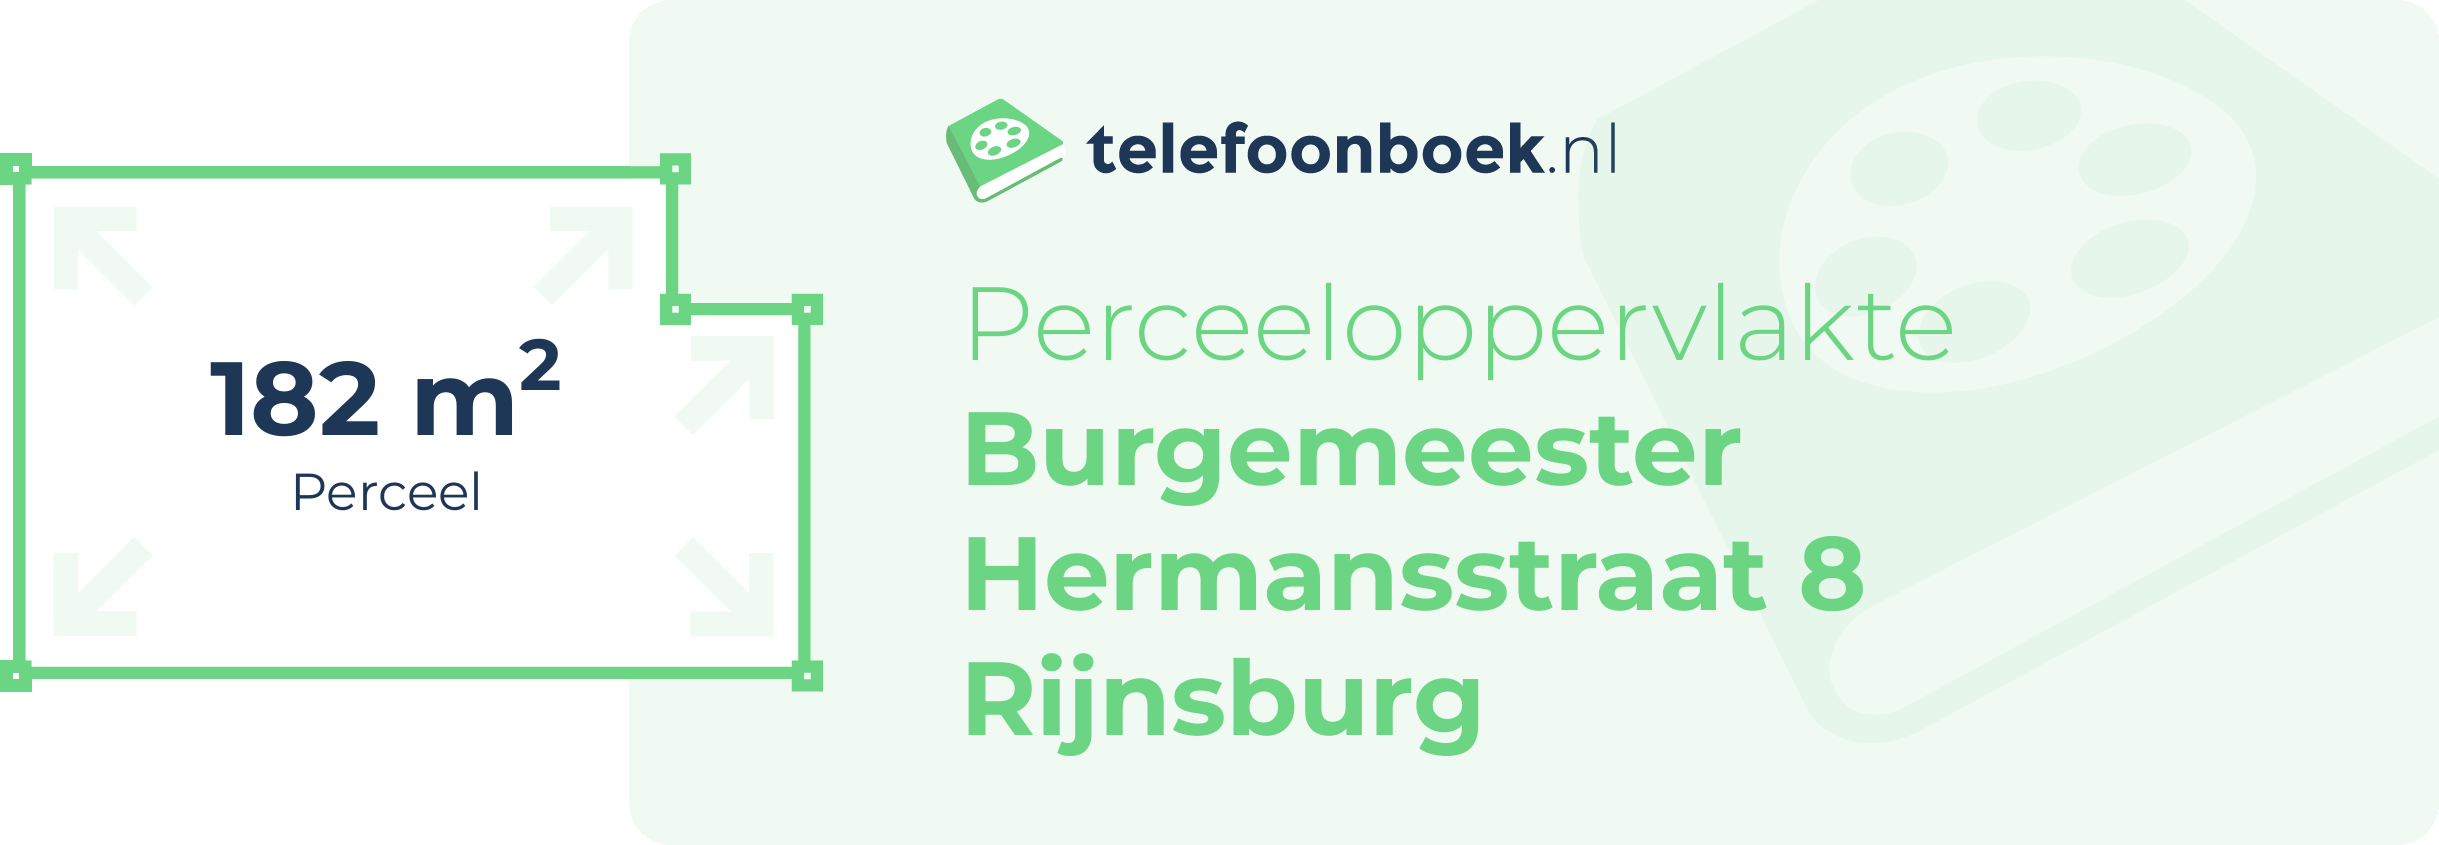 Perceeloppervlakte Burgemeester Hermansstraat 8 Rijnsburg